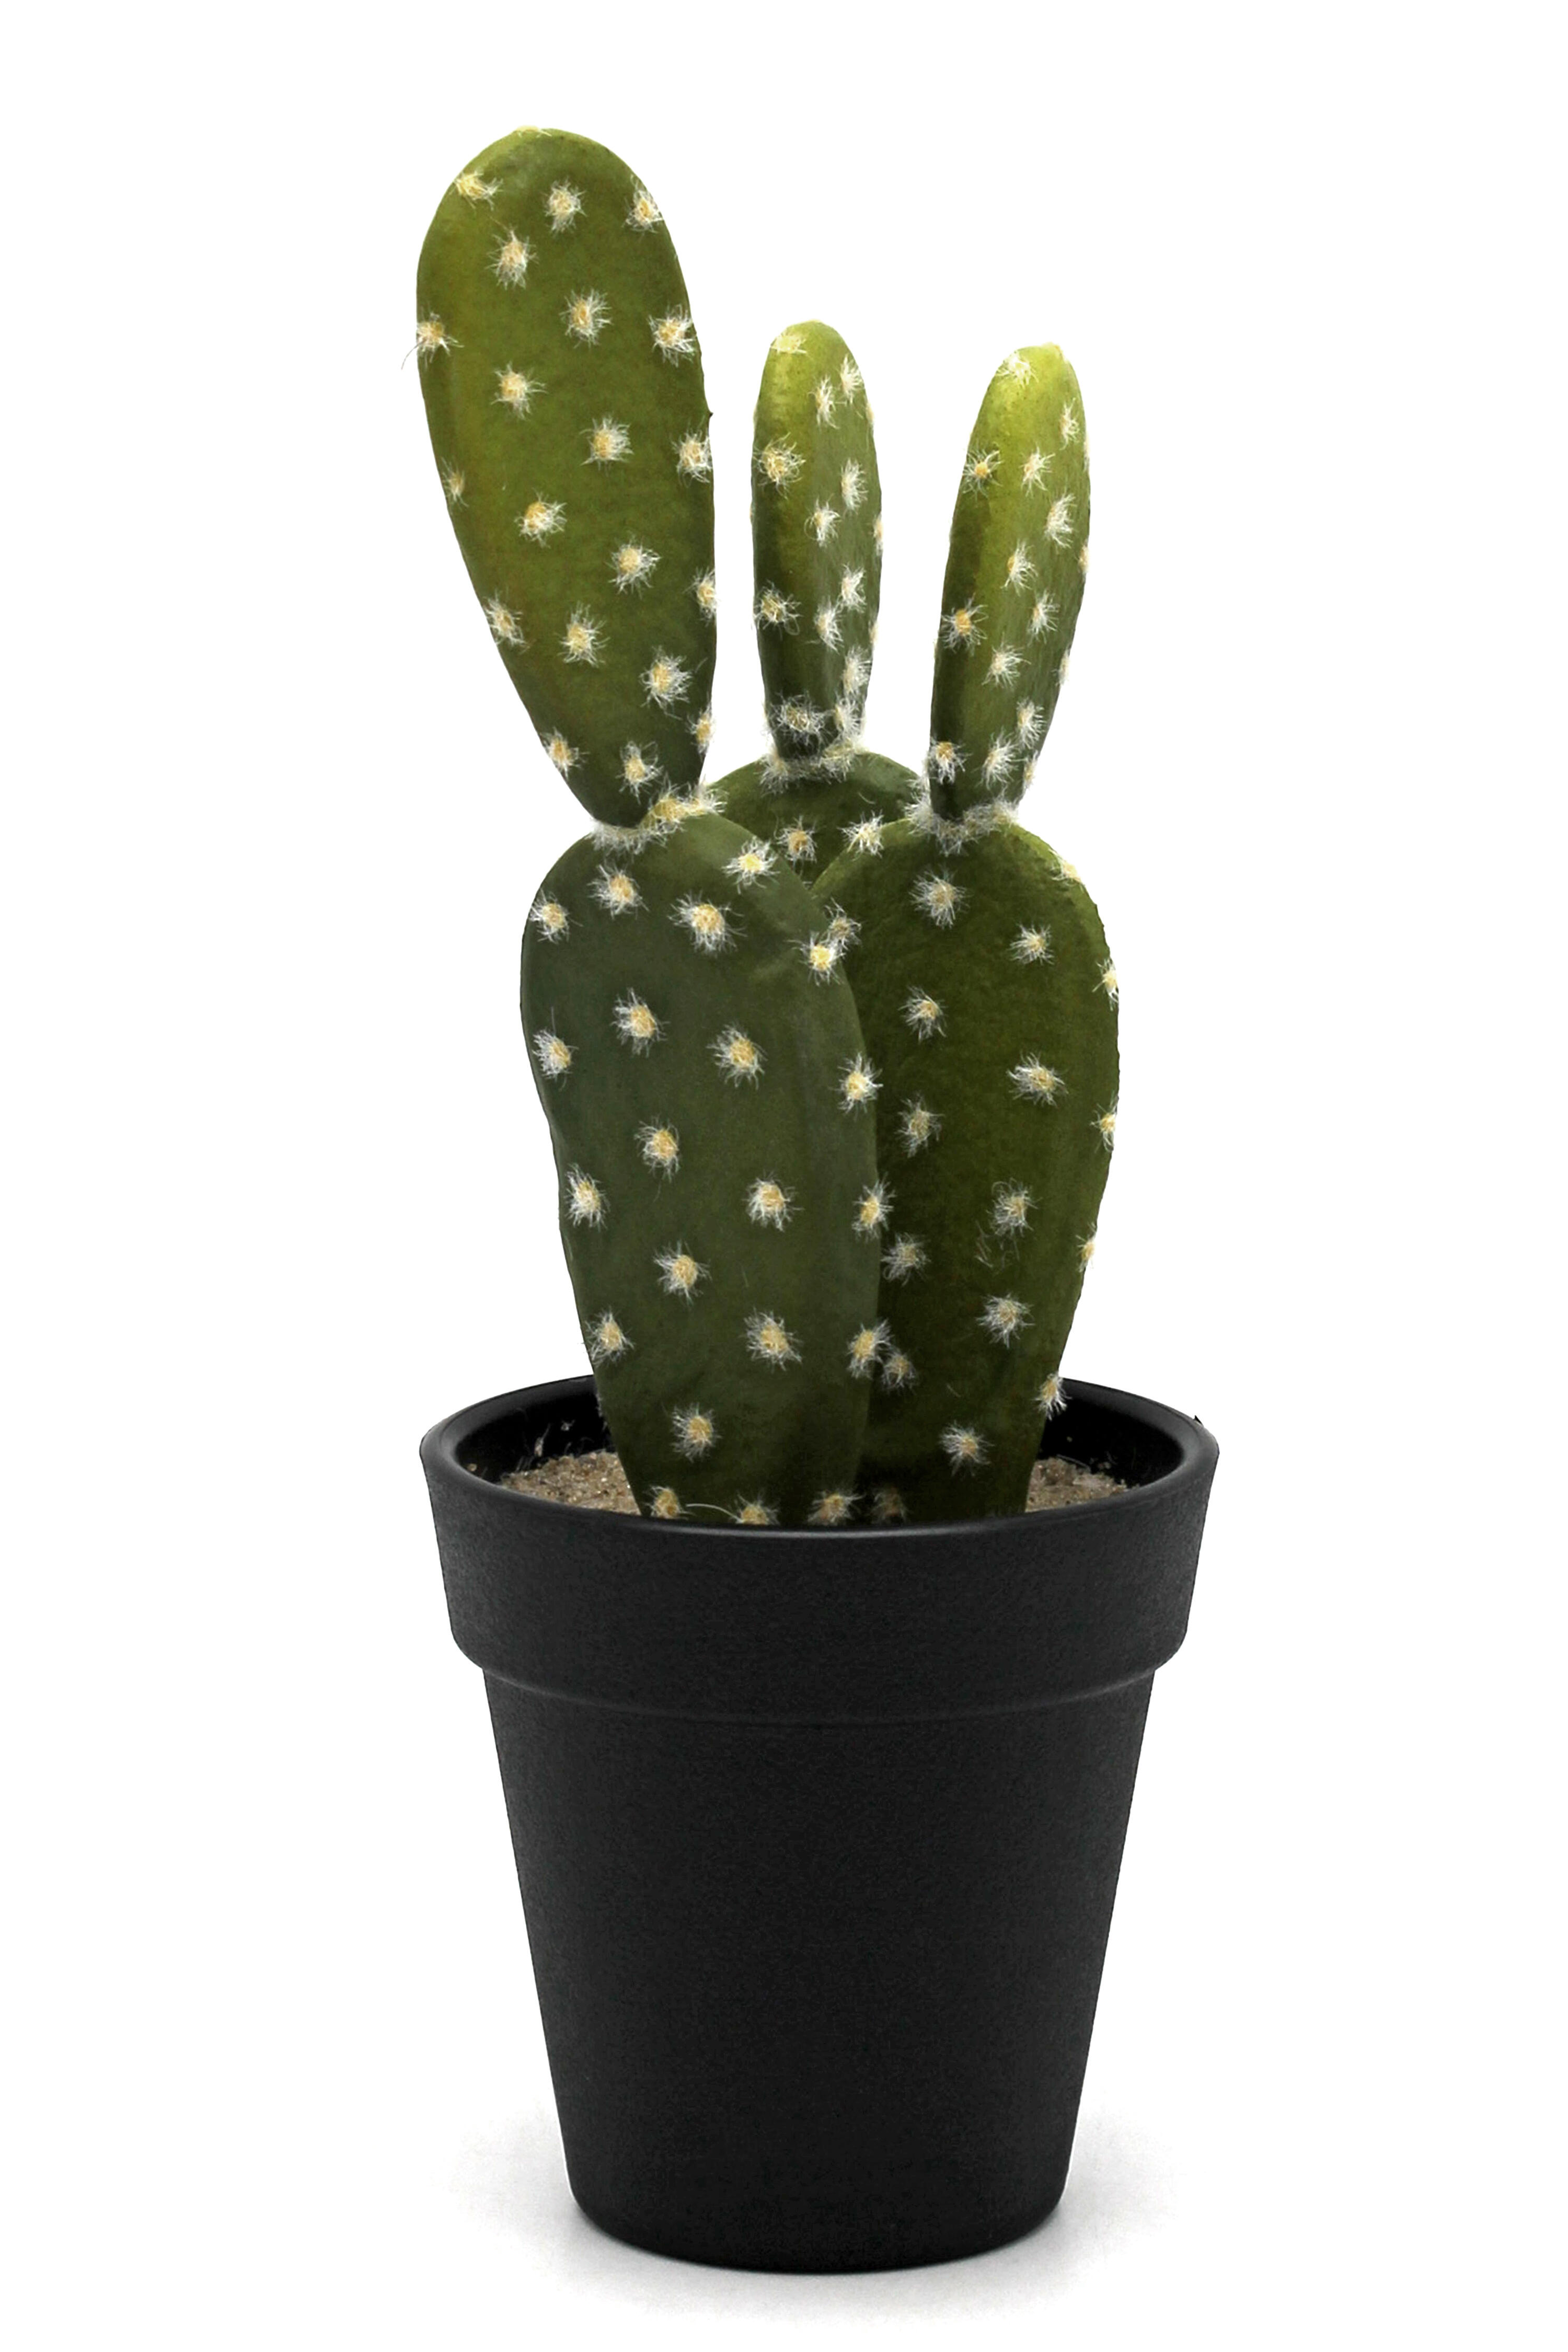 Planta artificial cactus de 20 cm de altura en maceta de 7.5 cm